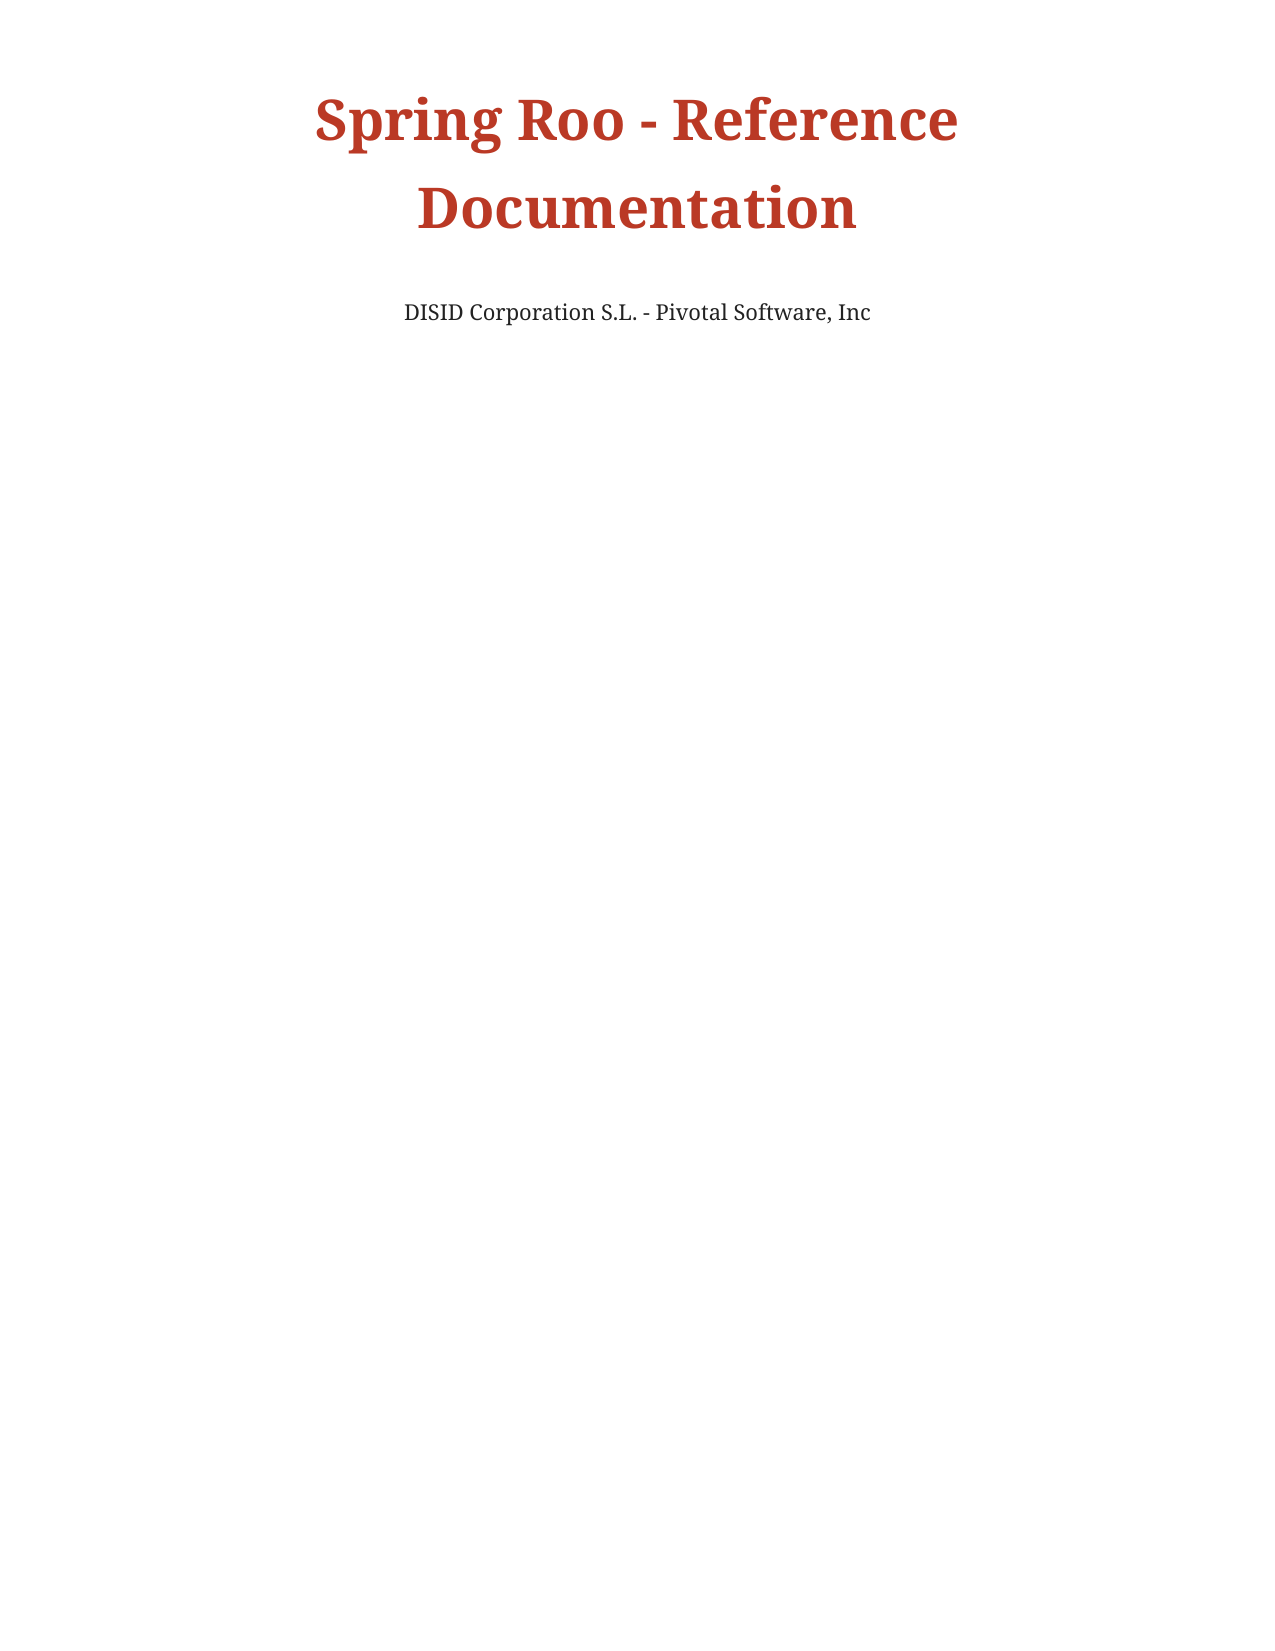 spring jms documentation